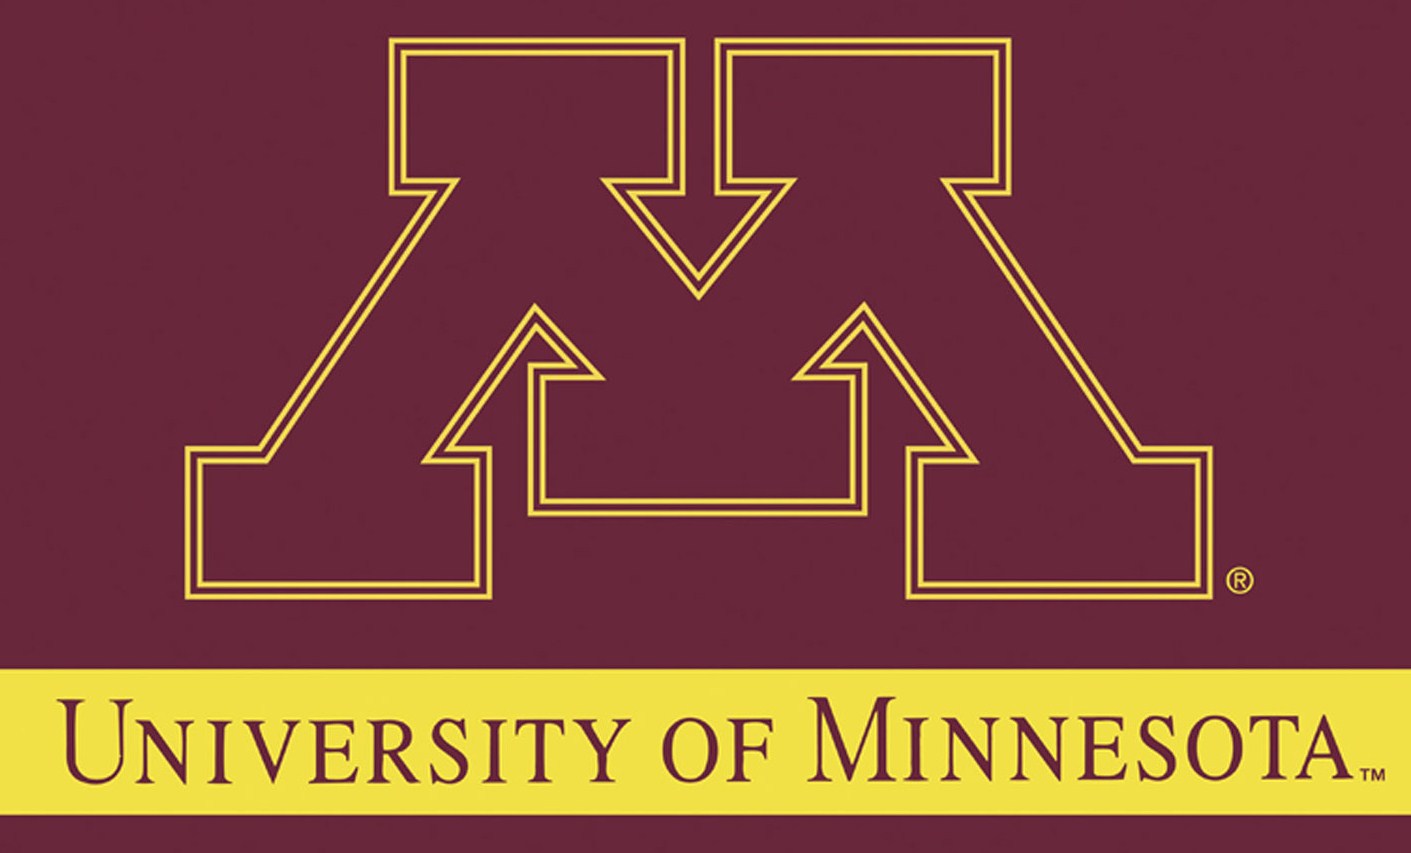 University of Minnesota Wallpaper - WallpaperSafari